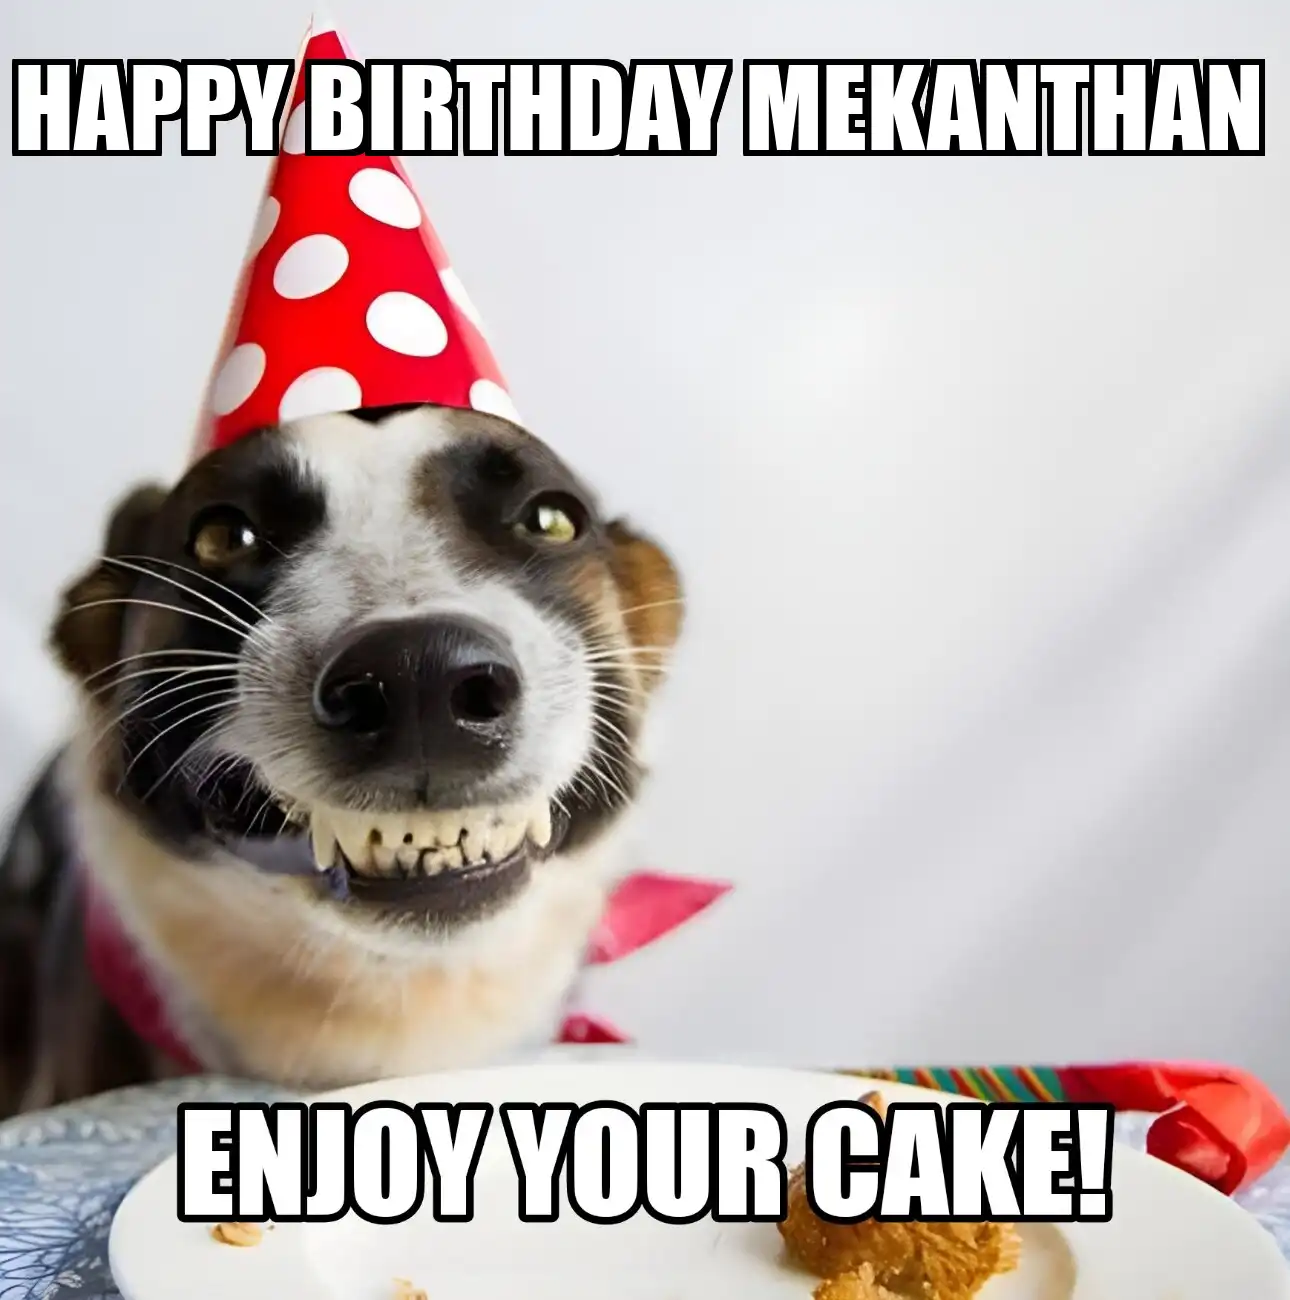 Happy Birthday Mekanthan Enjoy Your Cake Dog Meme